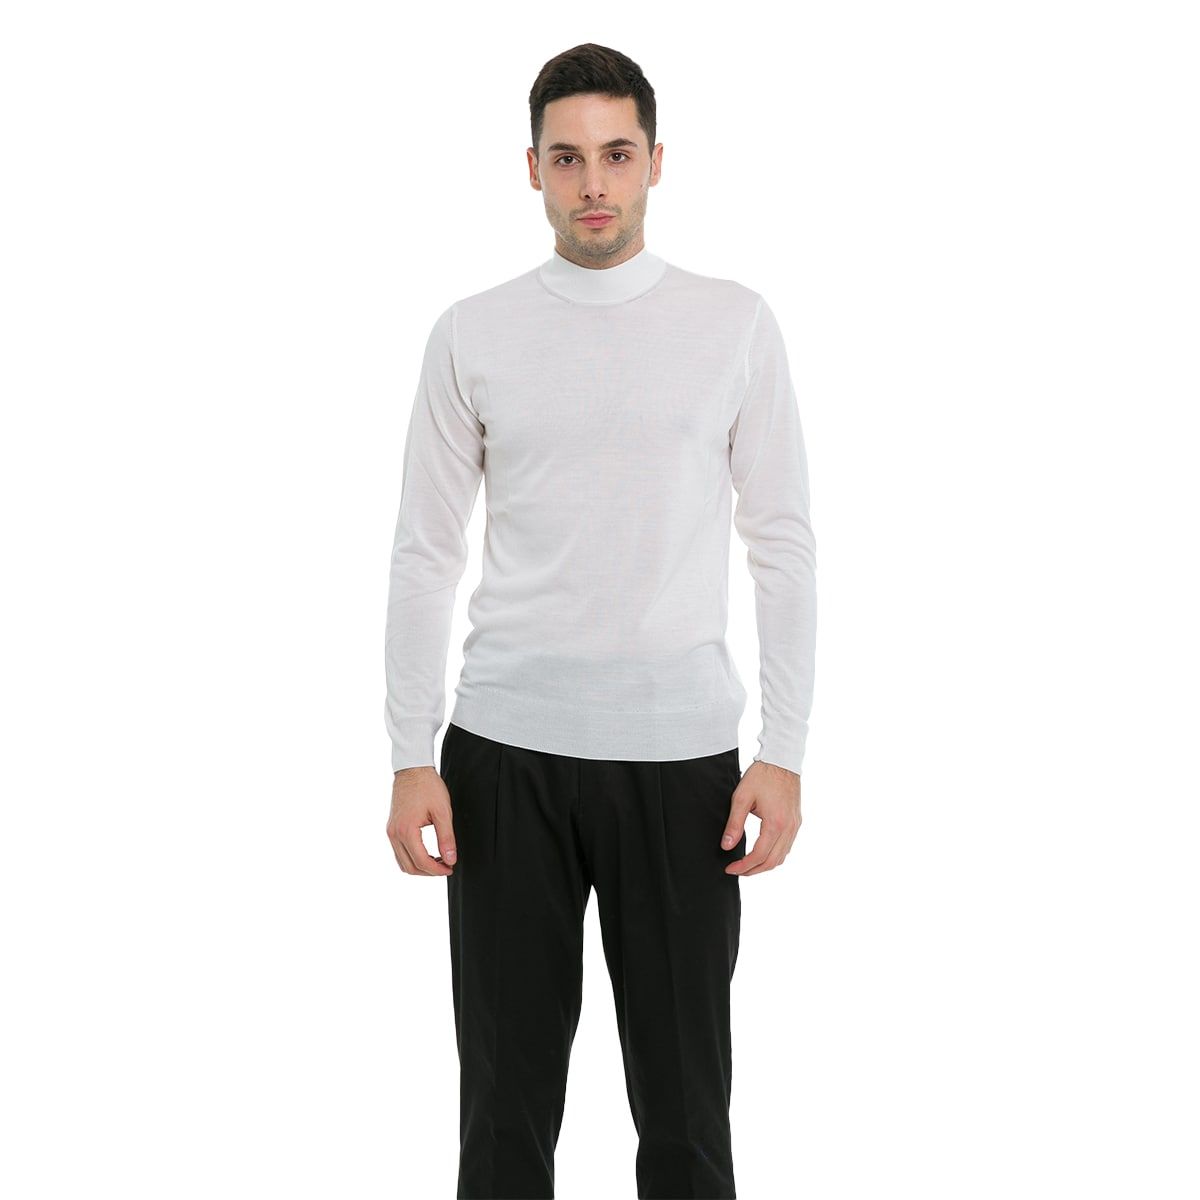 Hign Neck Sweater In White